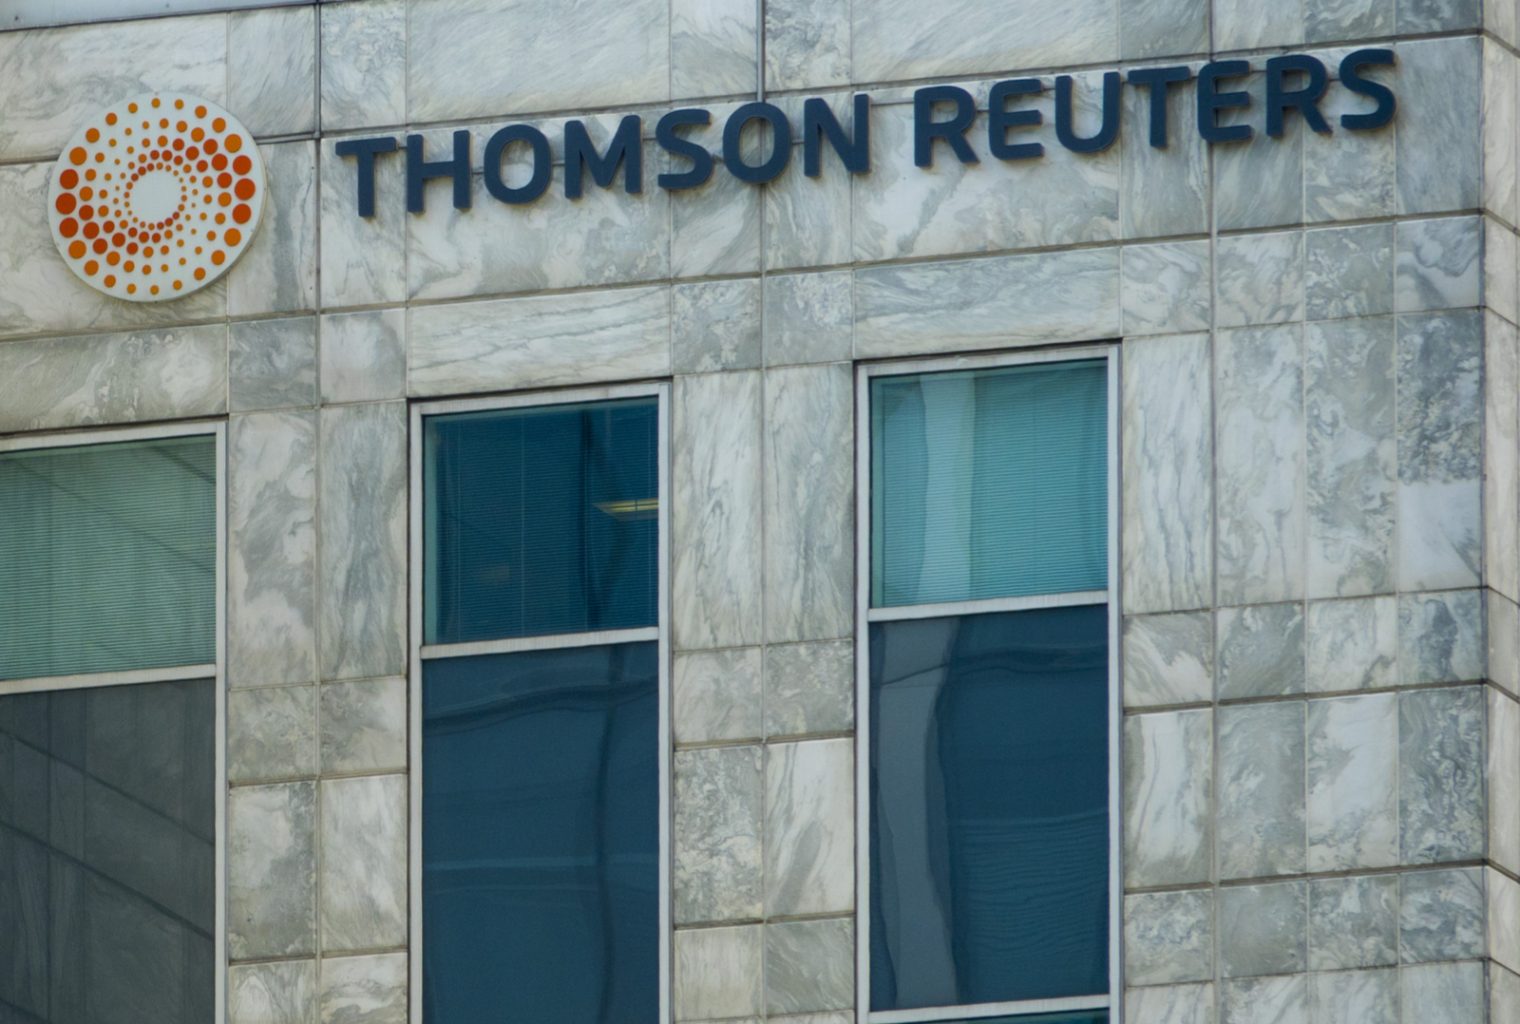 Reuters forex trading platform